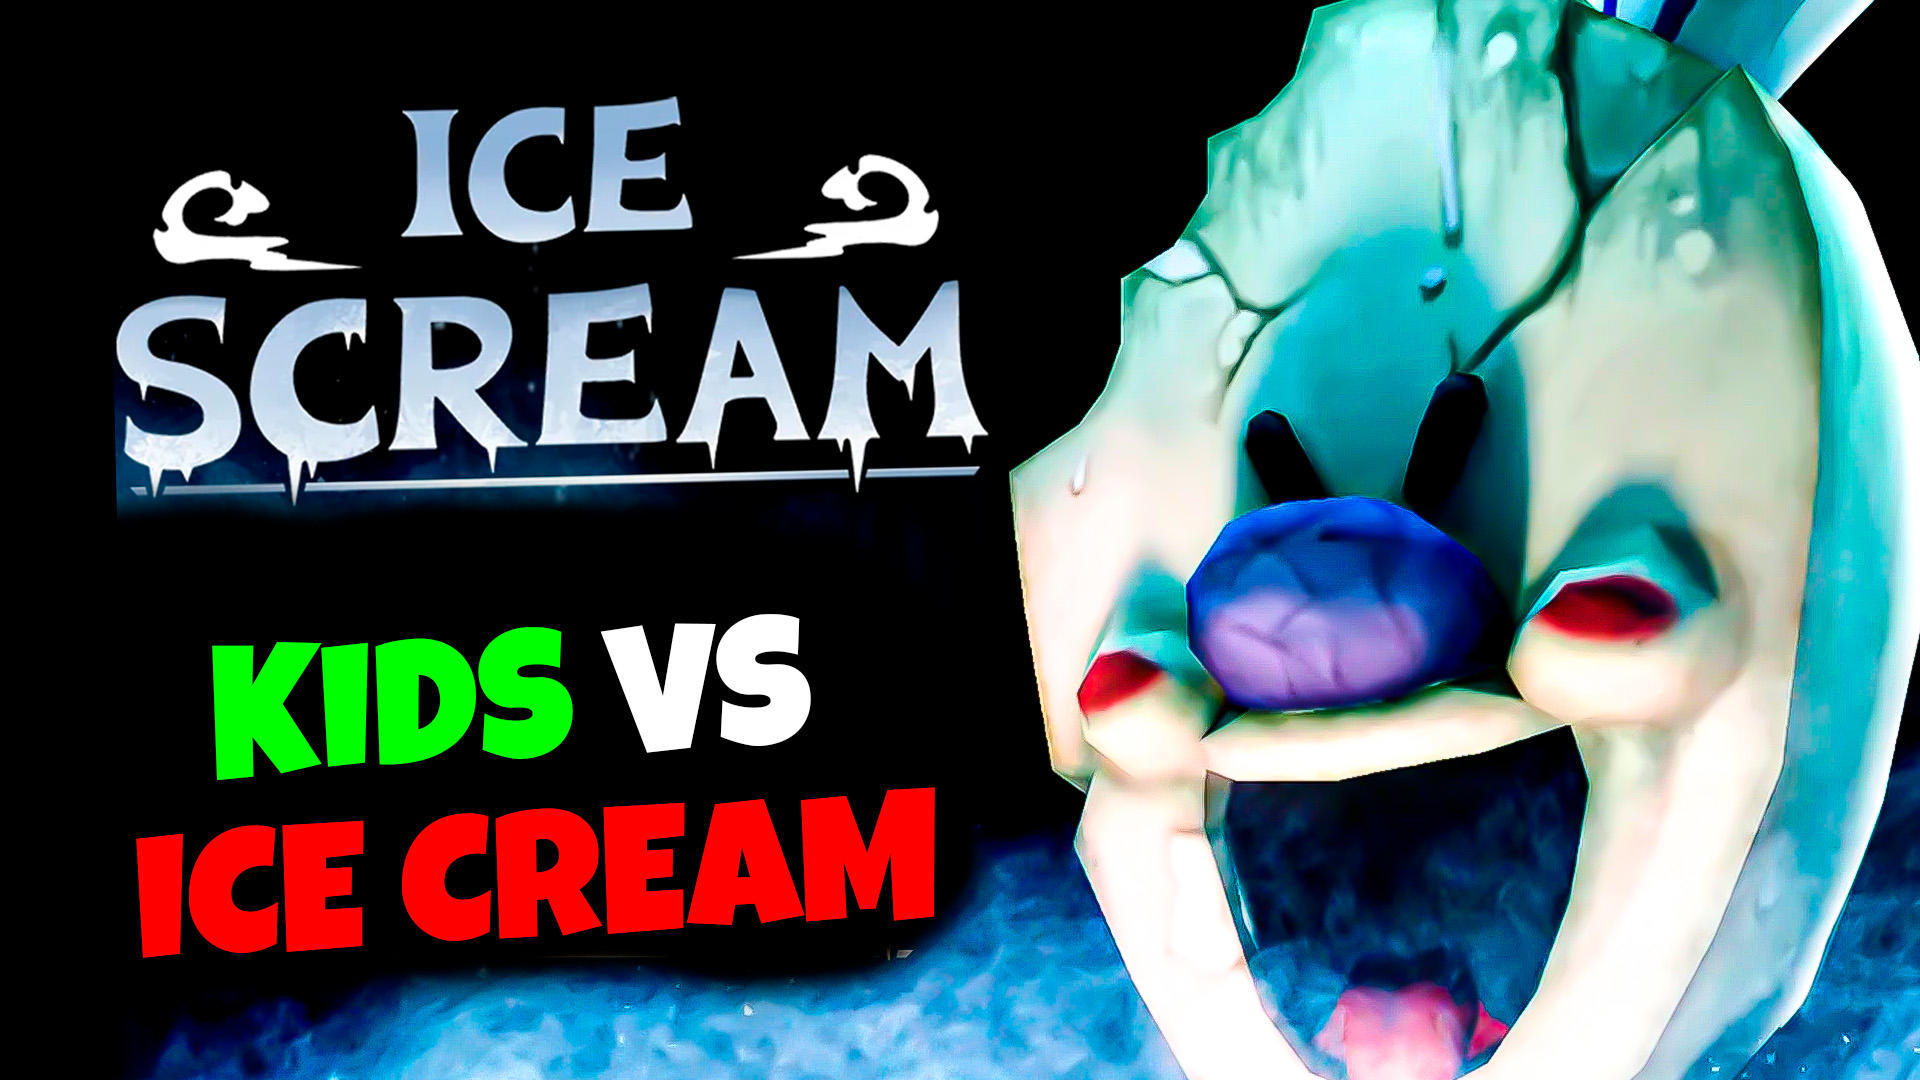 Ice Scream United: Multiplayer, Ice Scream Wiki